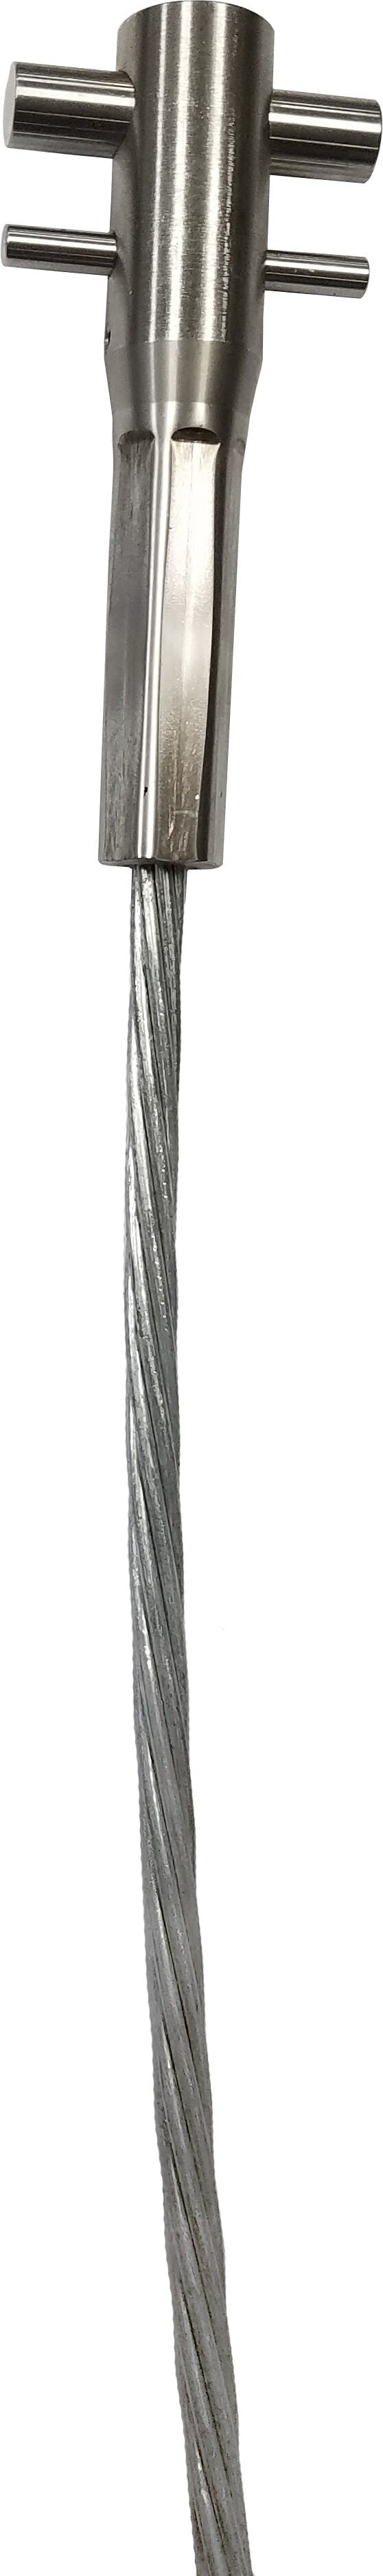 3M™ DBI-SALA® Lad-Saf™ Swaged Cable 6115028, 3/8 Inch, Galvanized Steel, 120 m